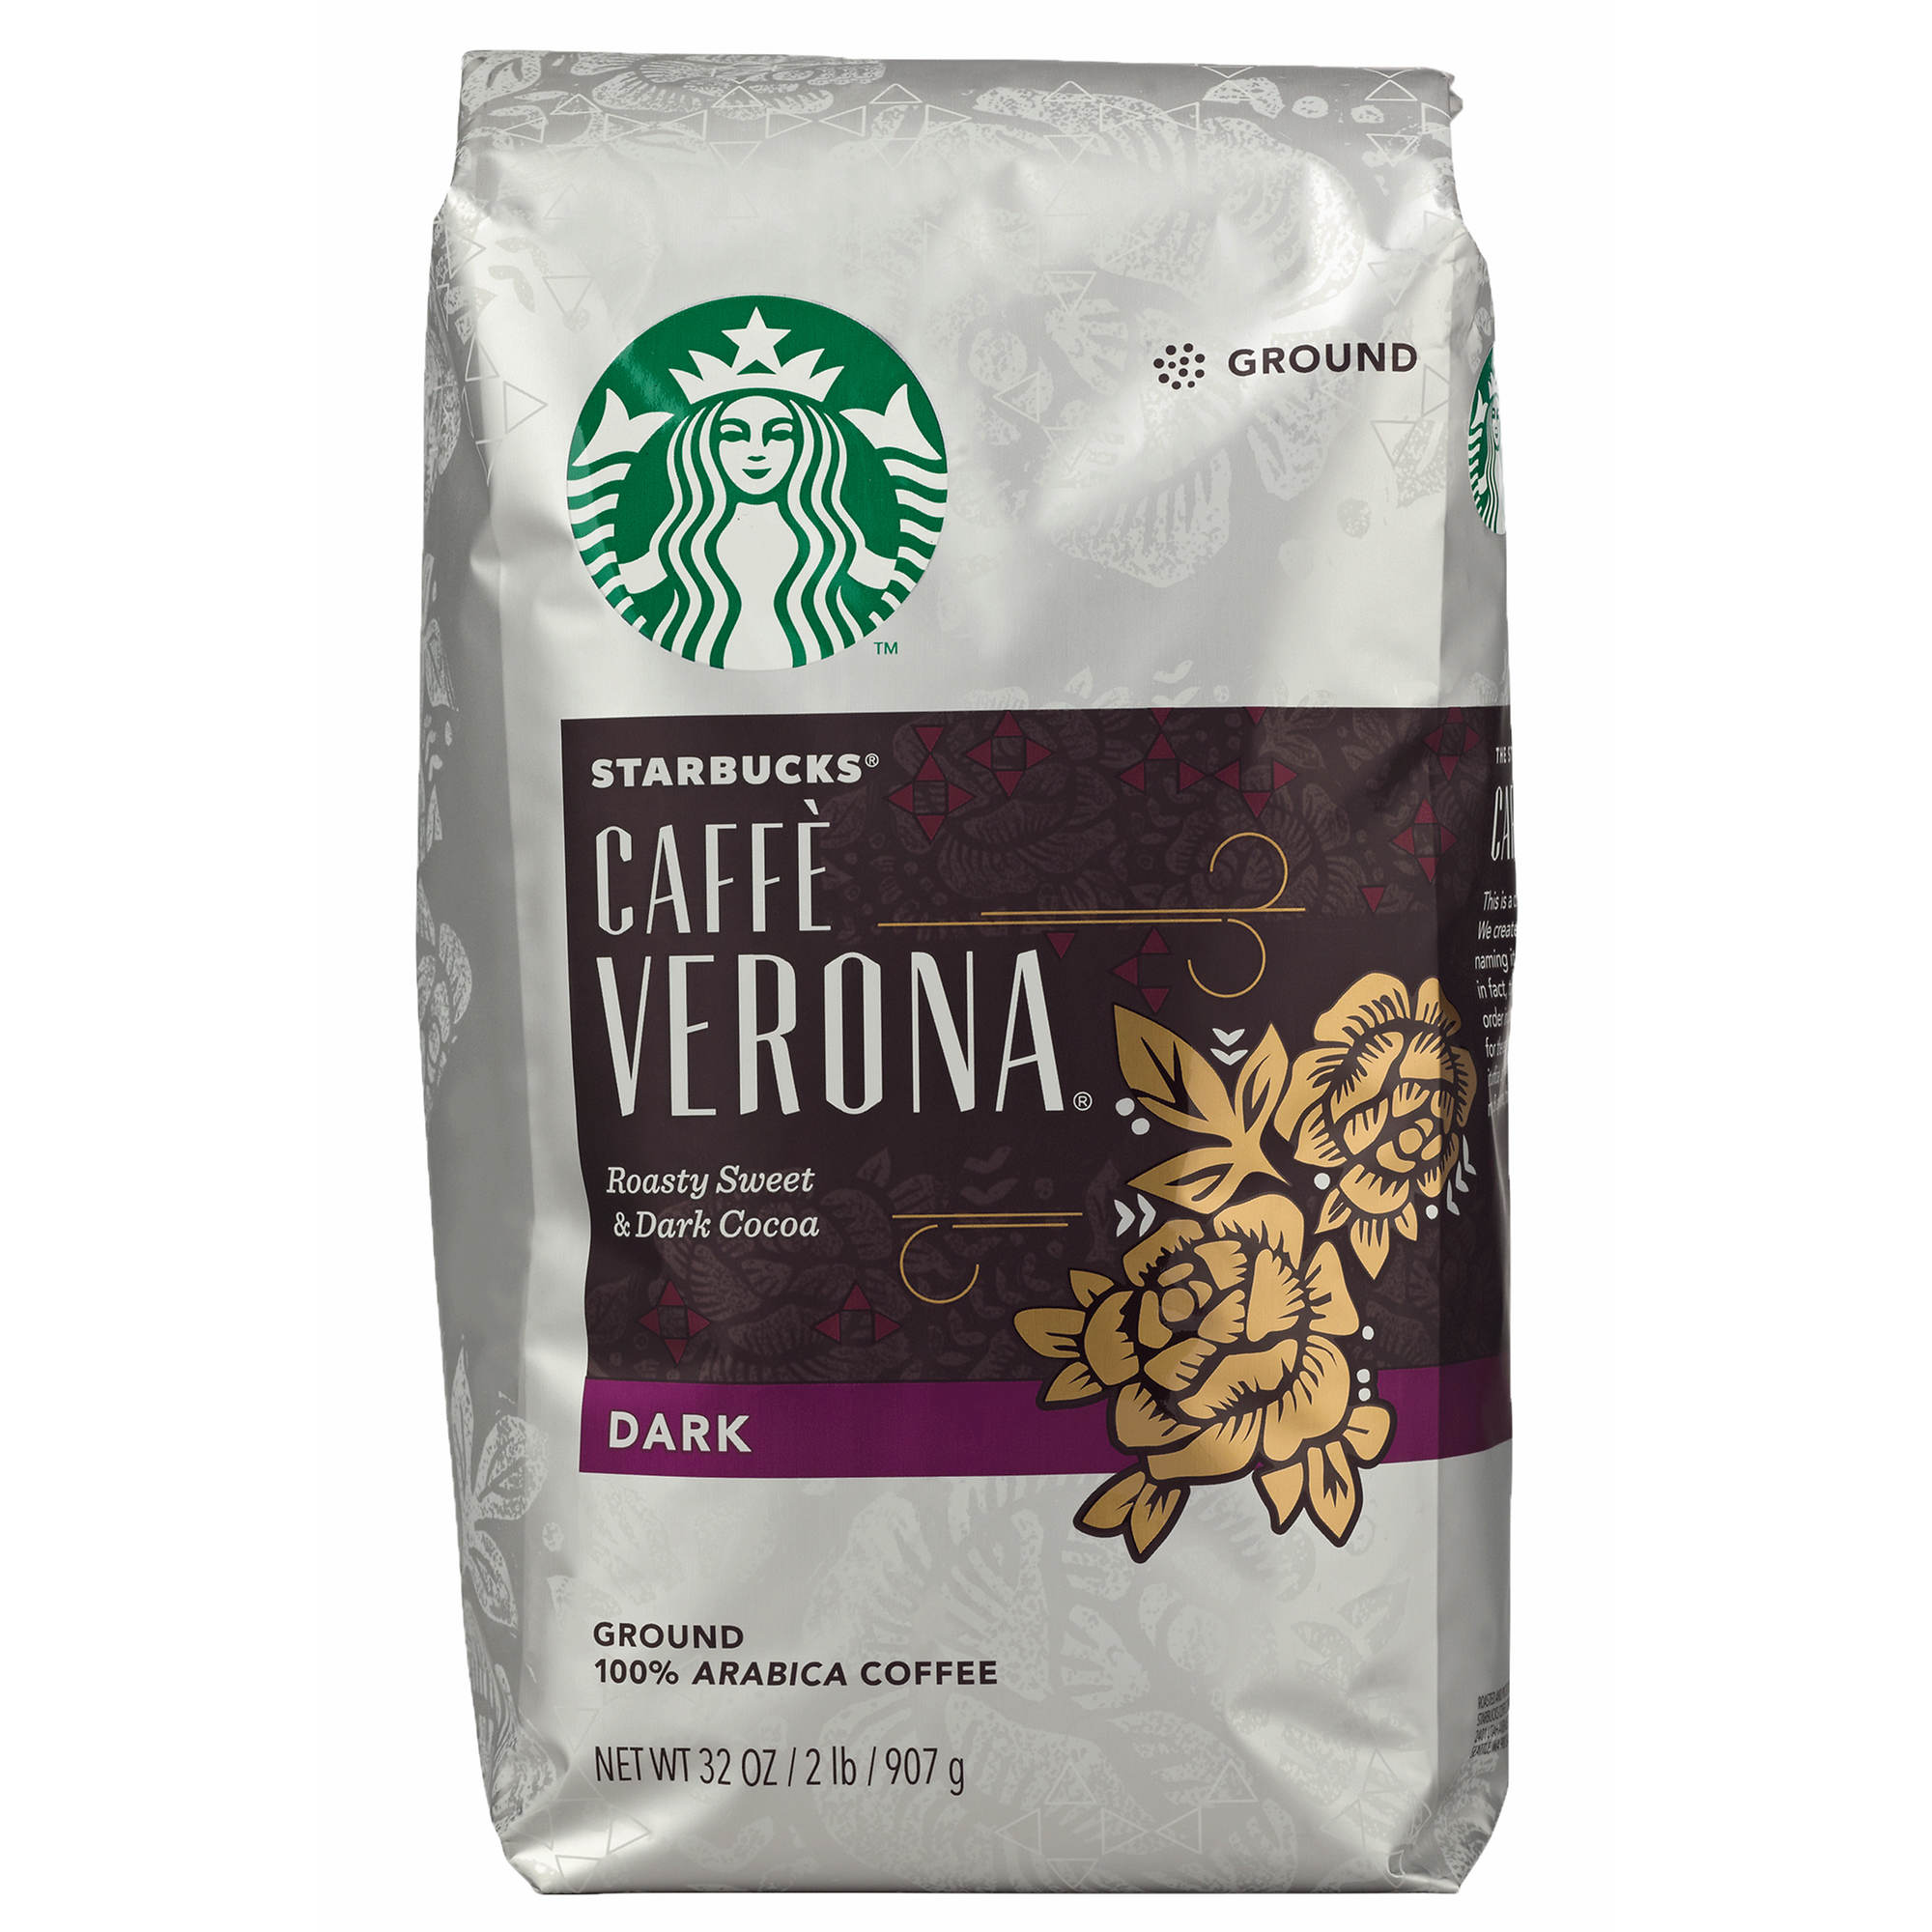 Starbucks Cafe Verona Dark Roast Ground Coffee, 32 oz